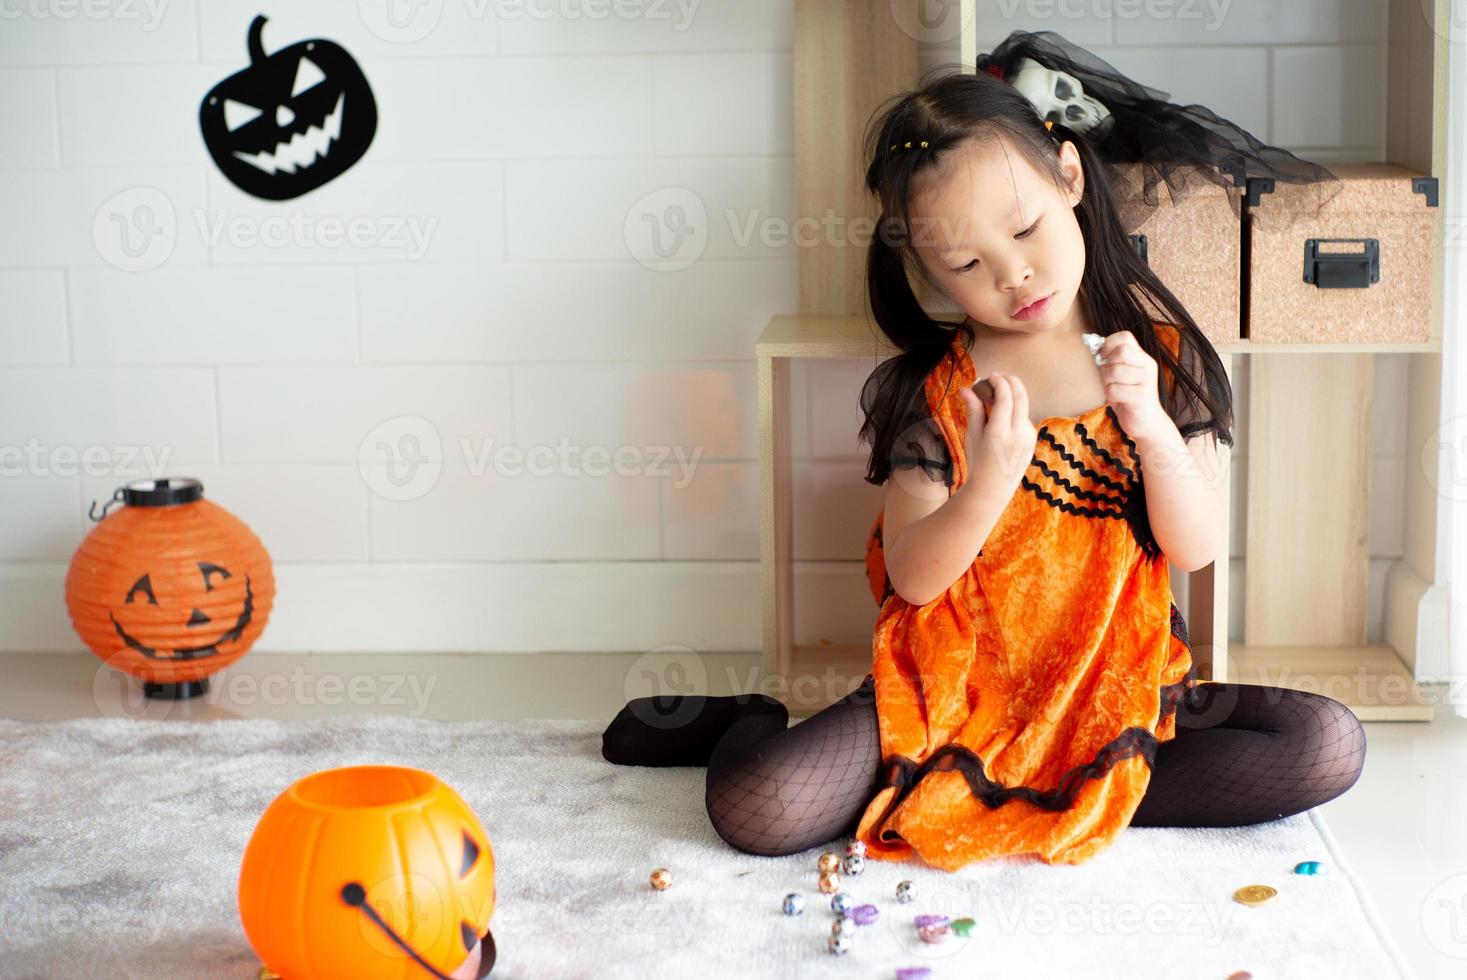 ritratto bambina asiatica che lancia e mangia caramelle e cioccolato da dolcetto o scherzetto con tema halloween in background foto